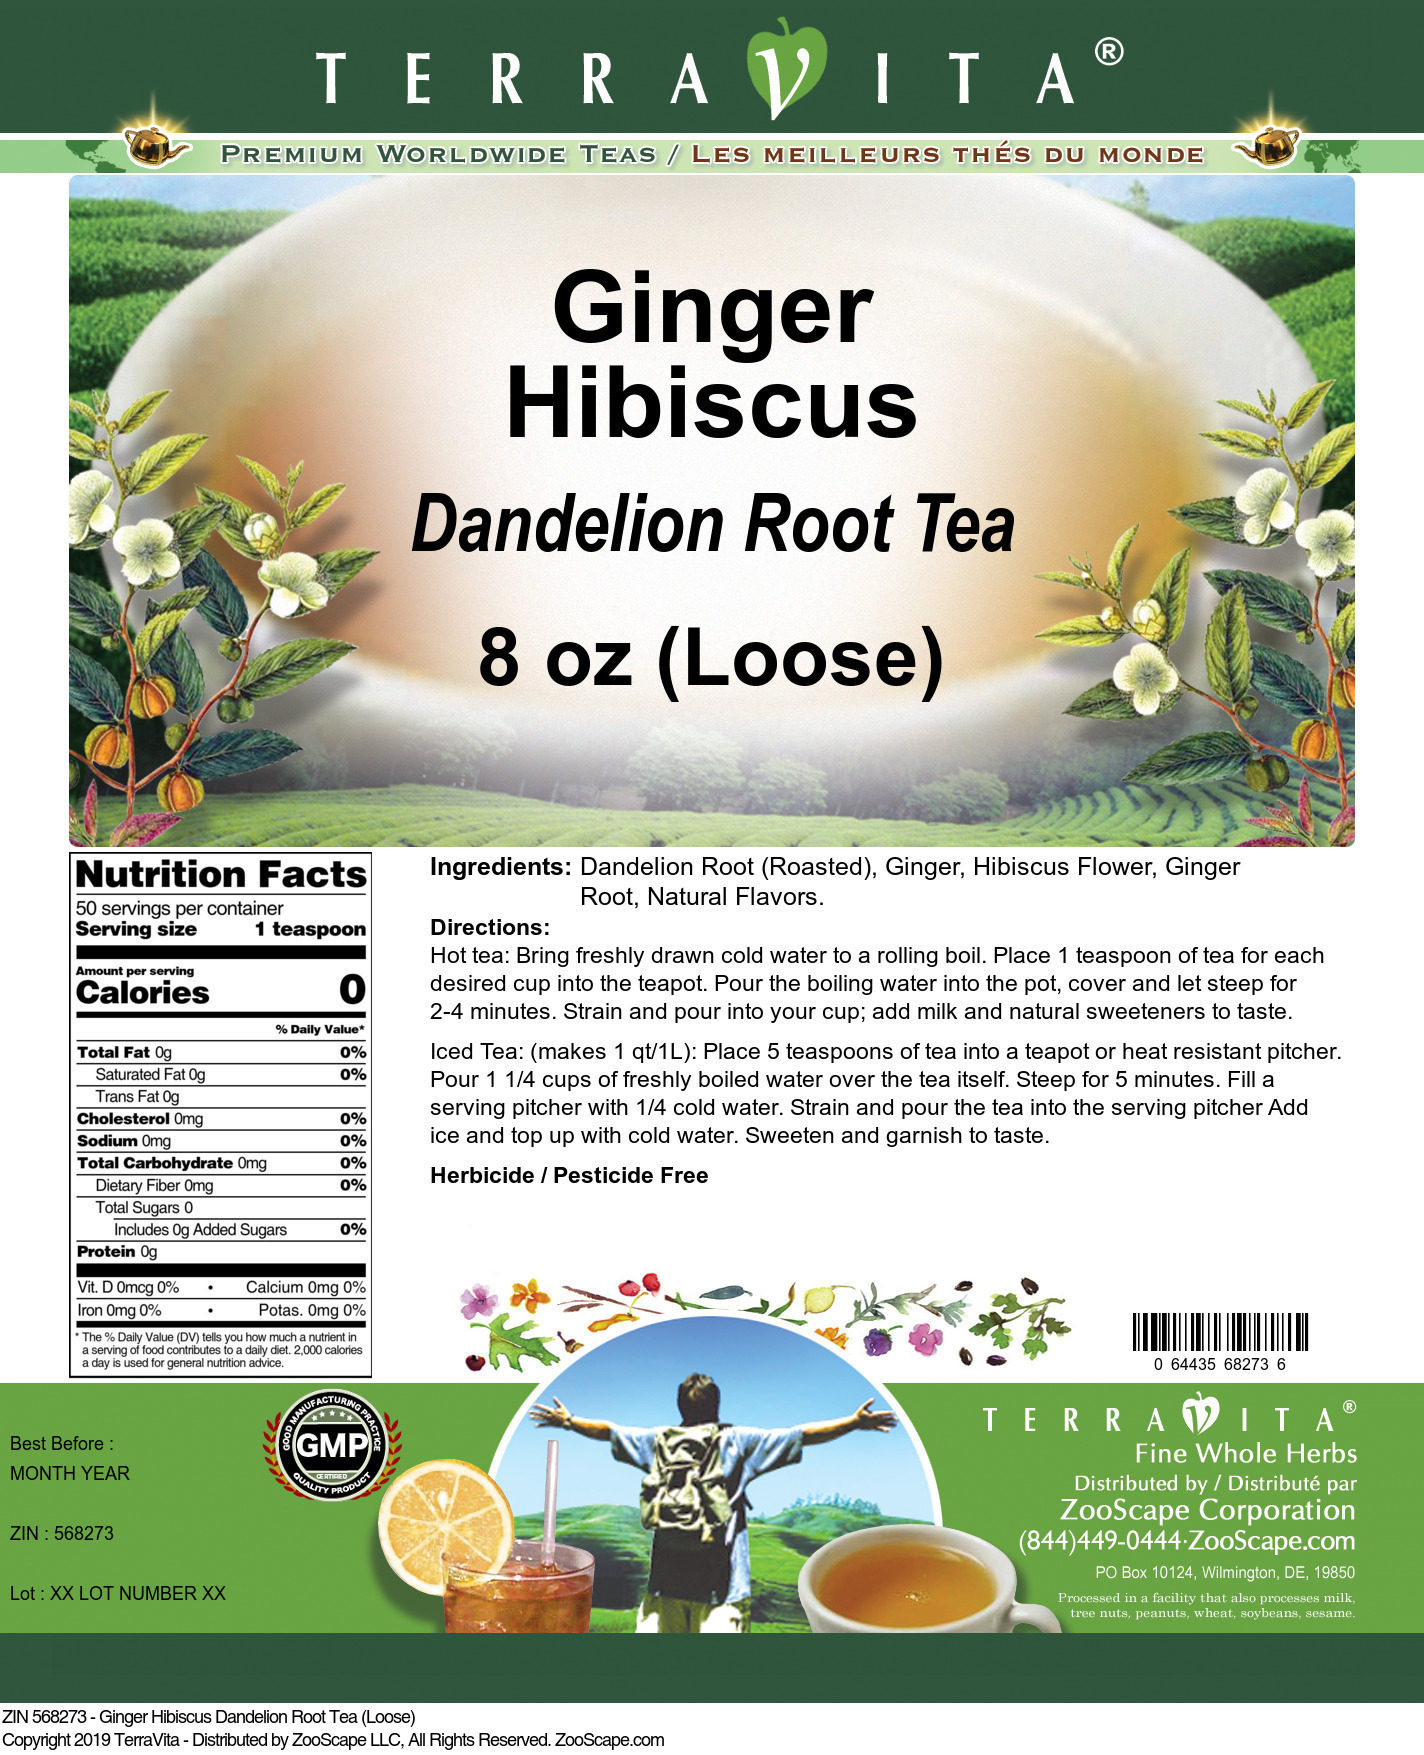 Ginger Hibiscus Dandelion Root Tea (Loose) - Label